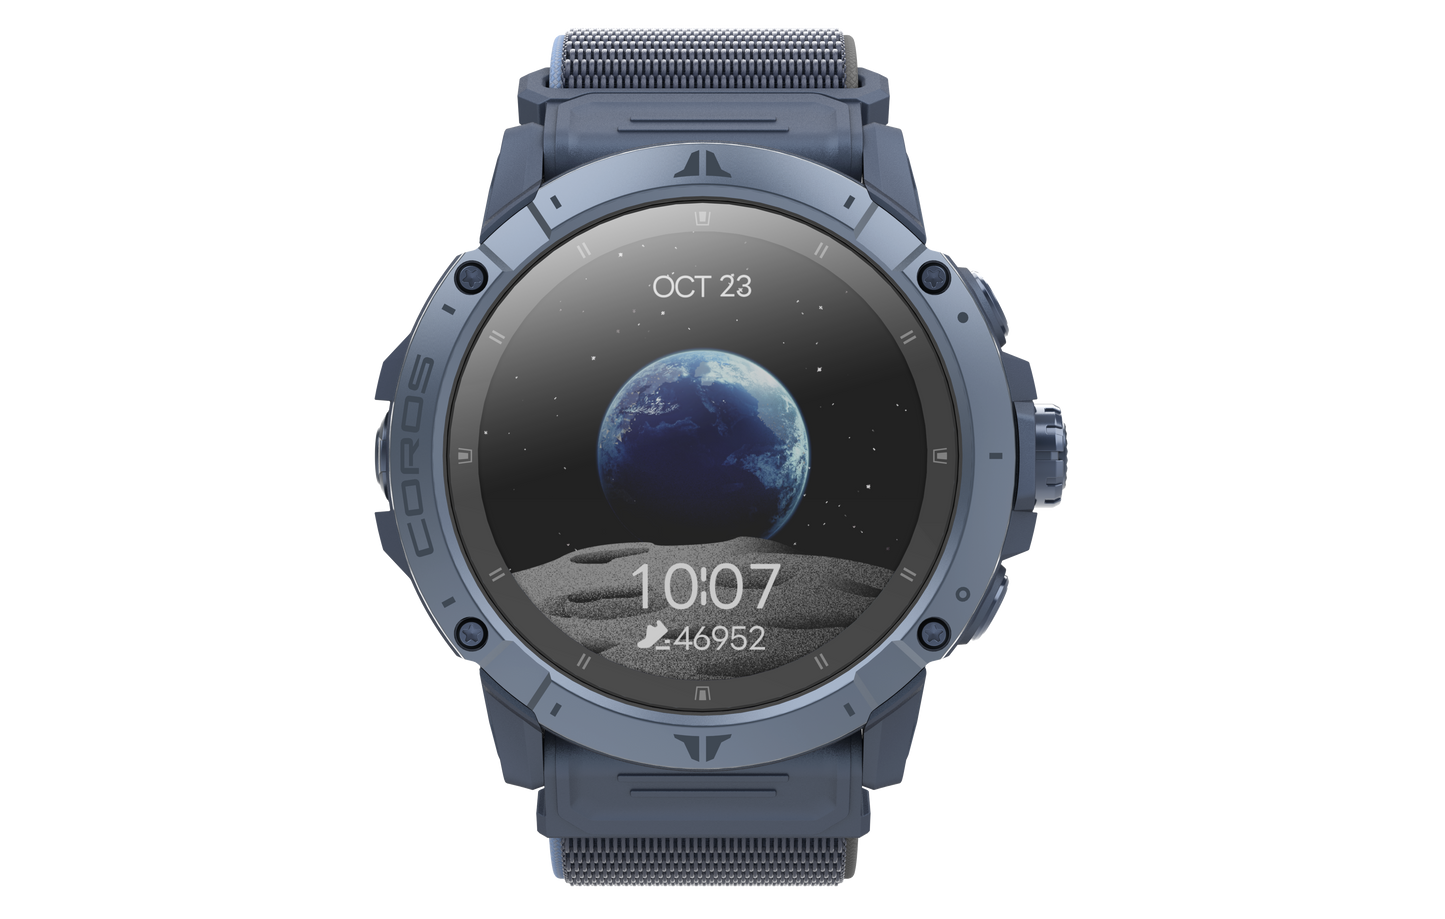 COROS - VERTIX 2S GPS Adventure Watch - Earth (Blue)